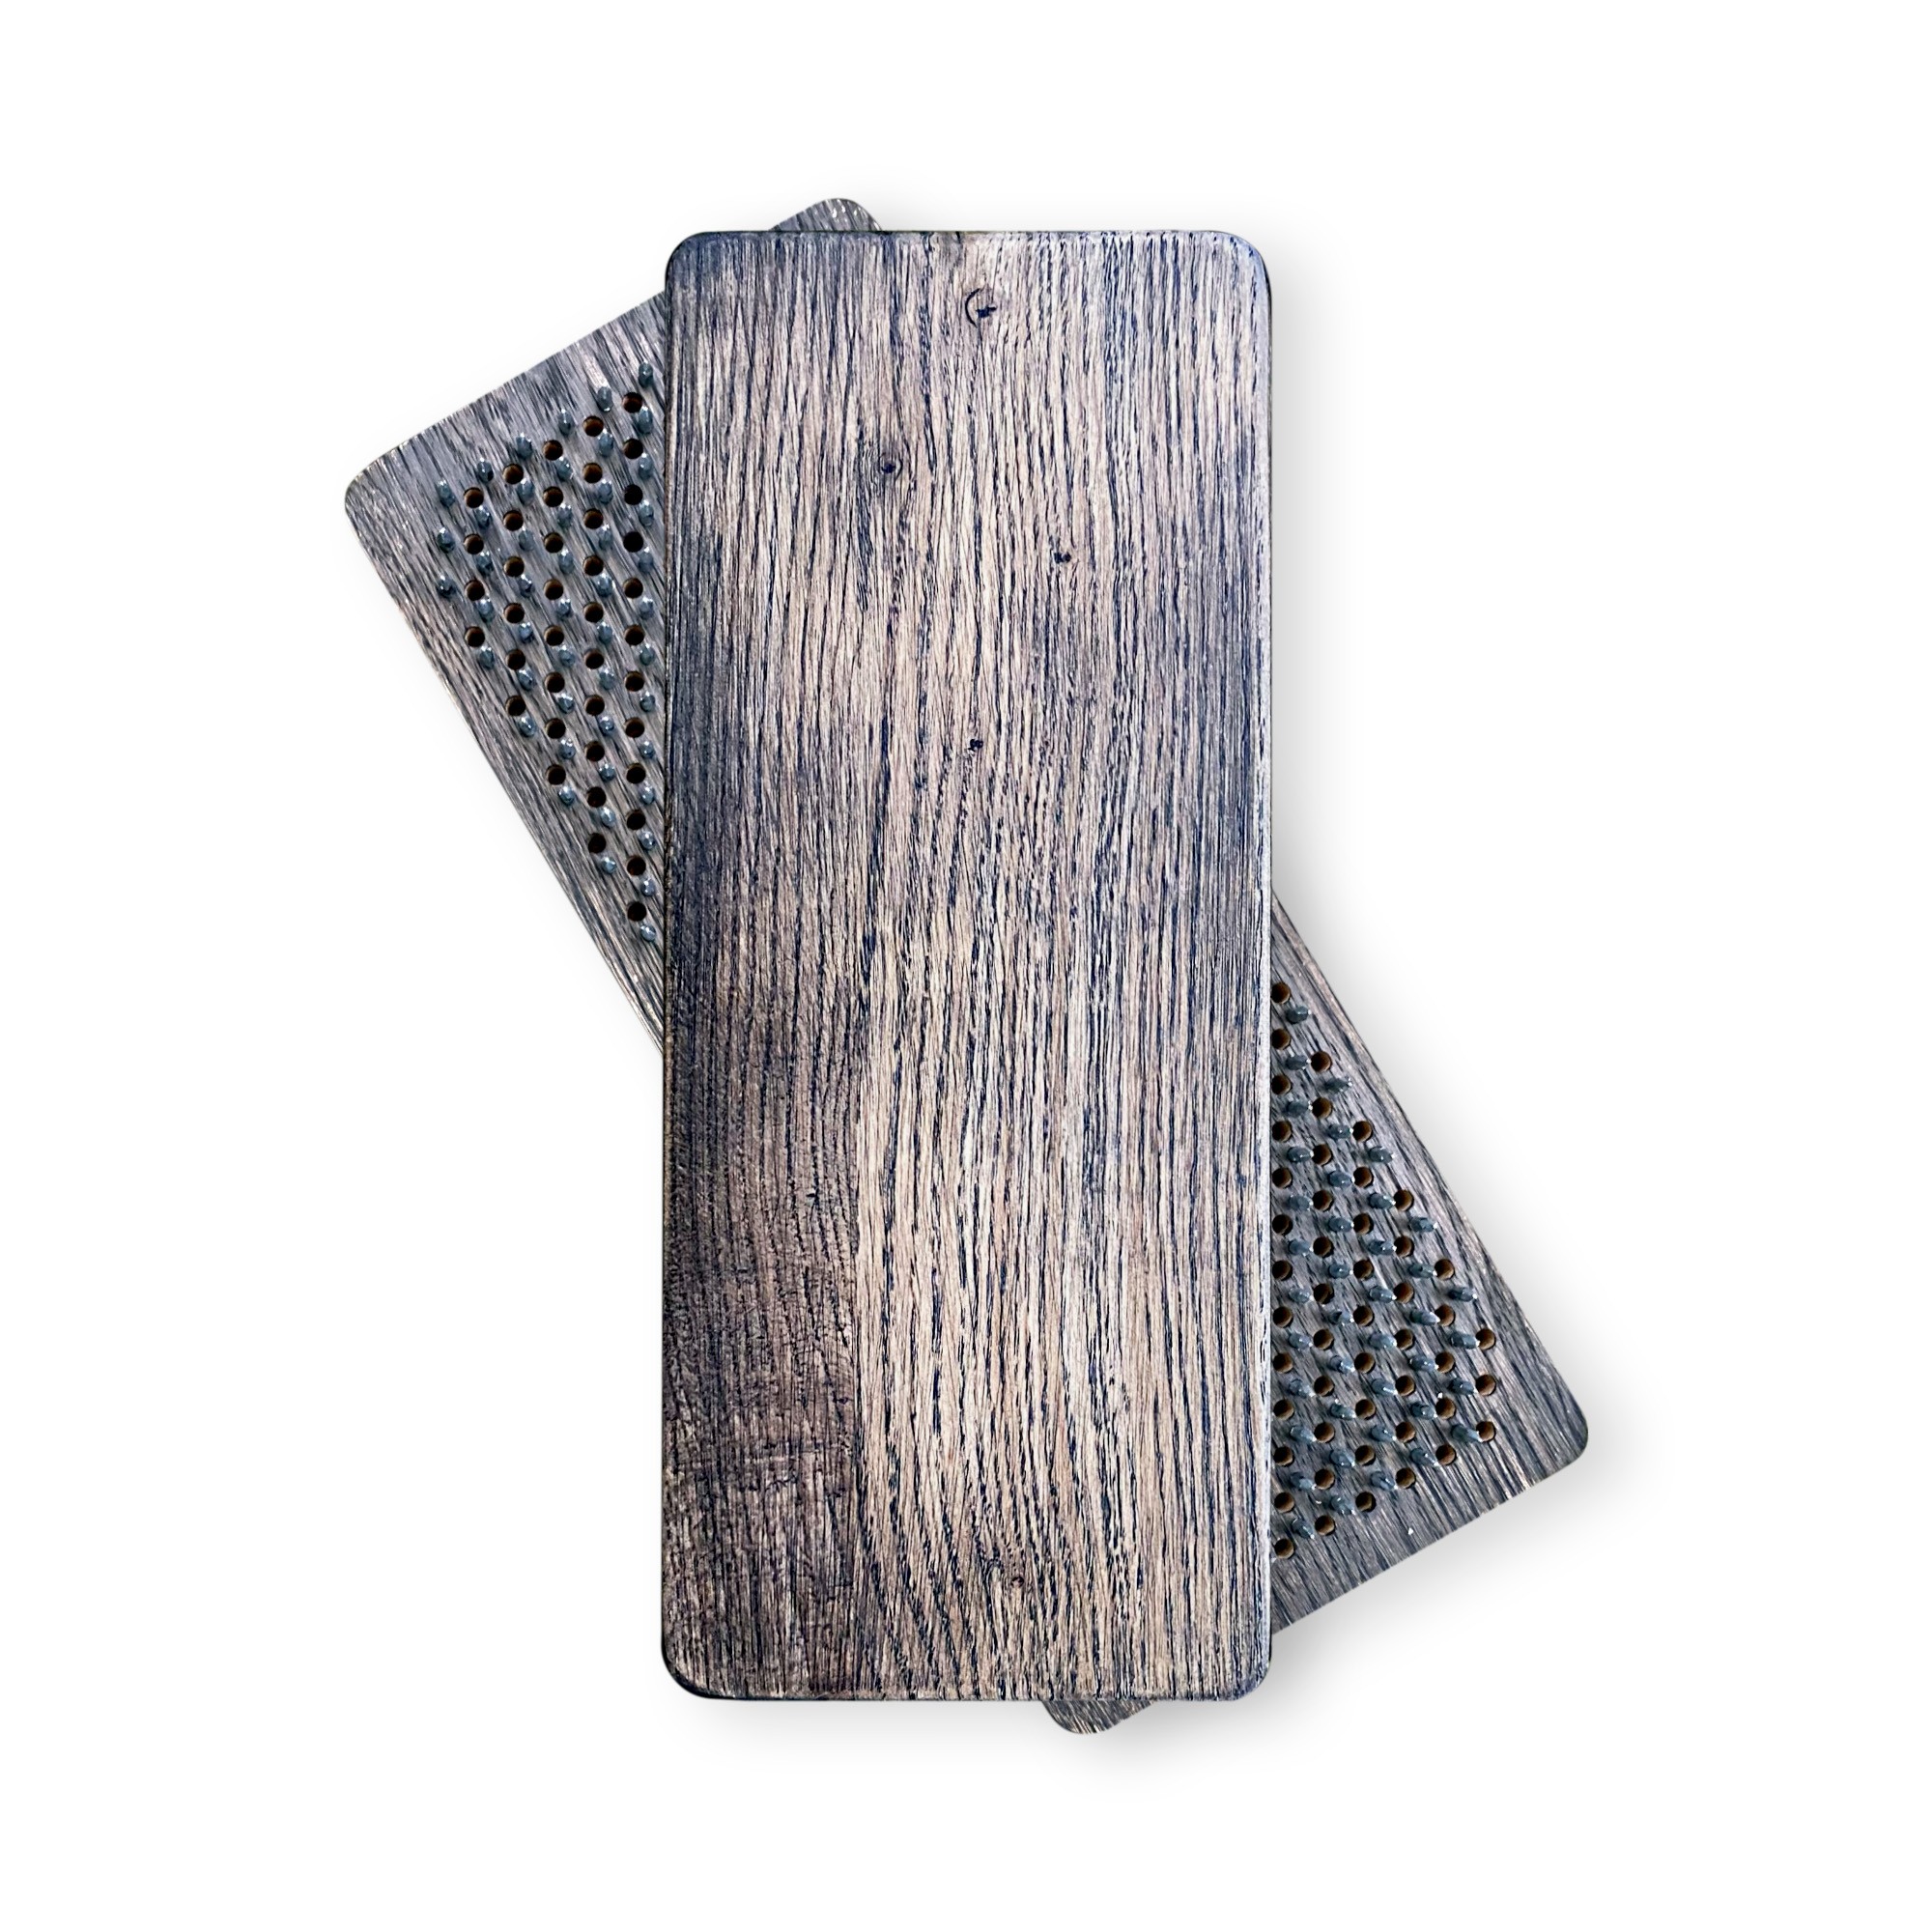 Oh! SADHU Board for Yoga from Natural Oak Wood, Rectangle Black